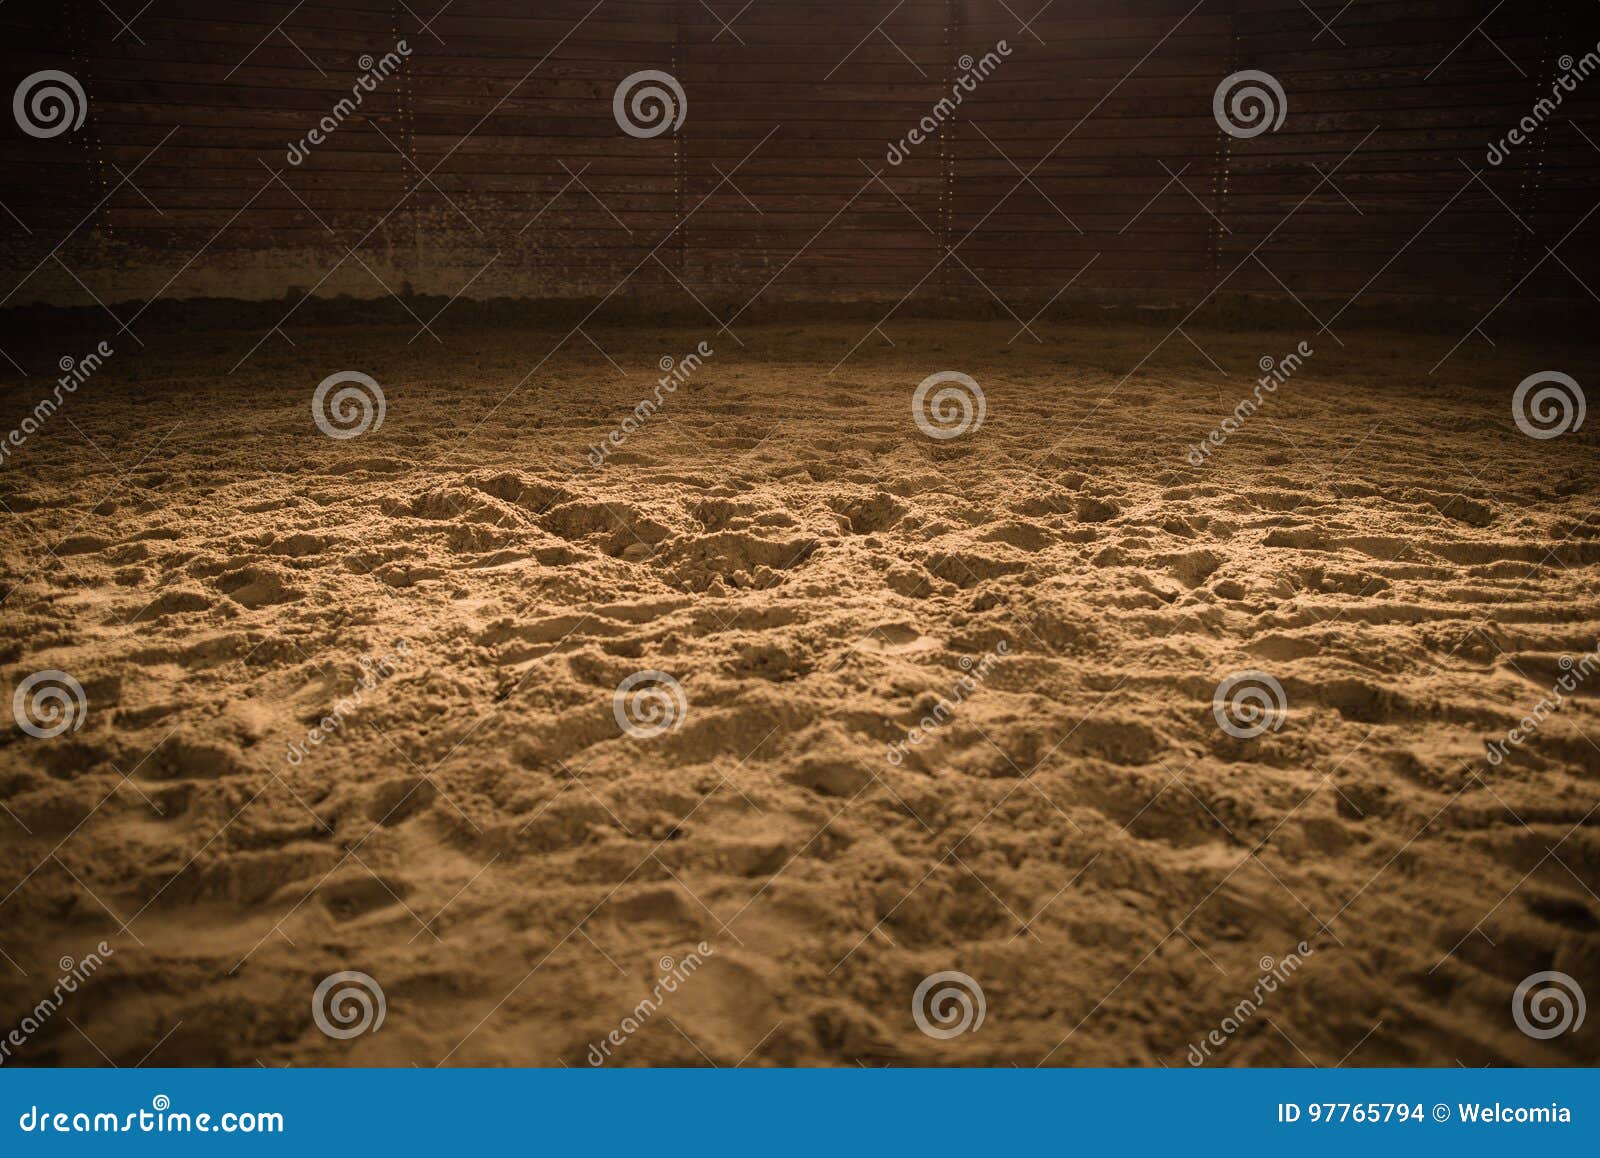 sandy horse riding arena